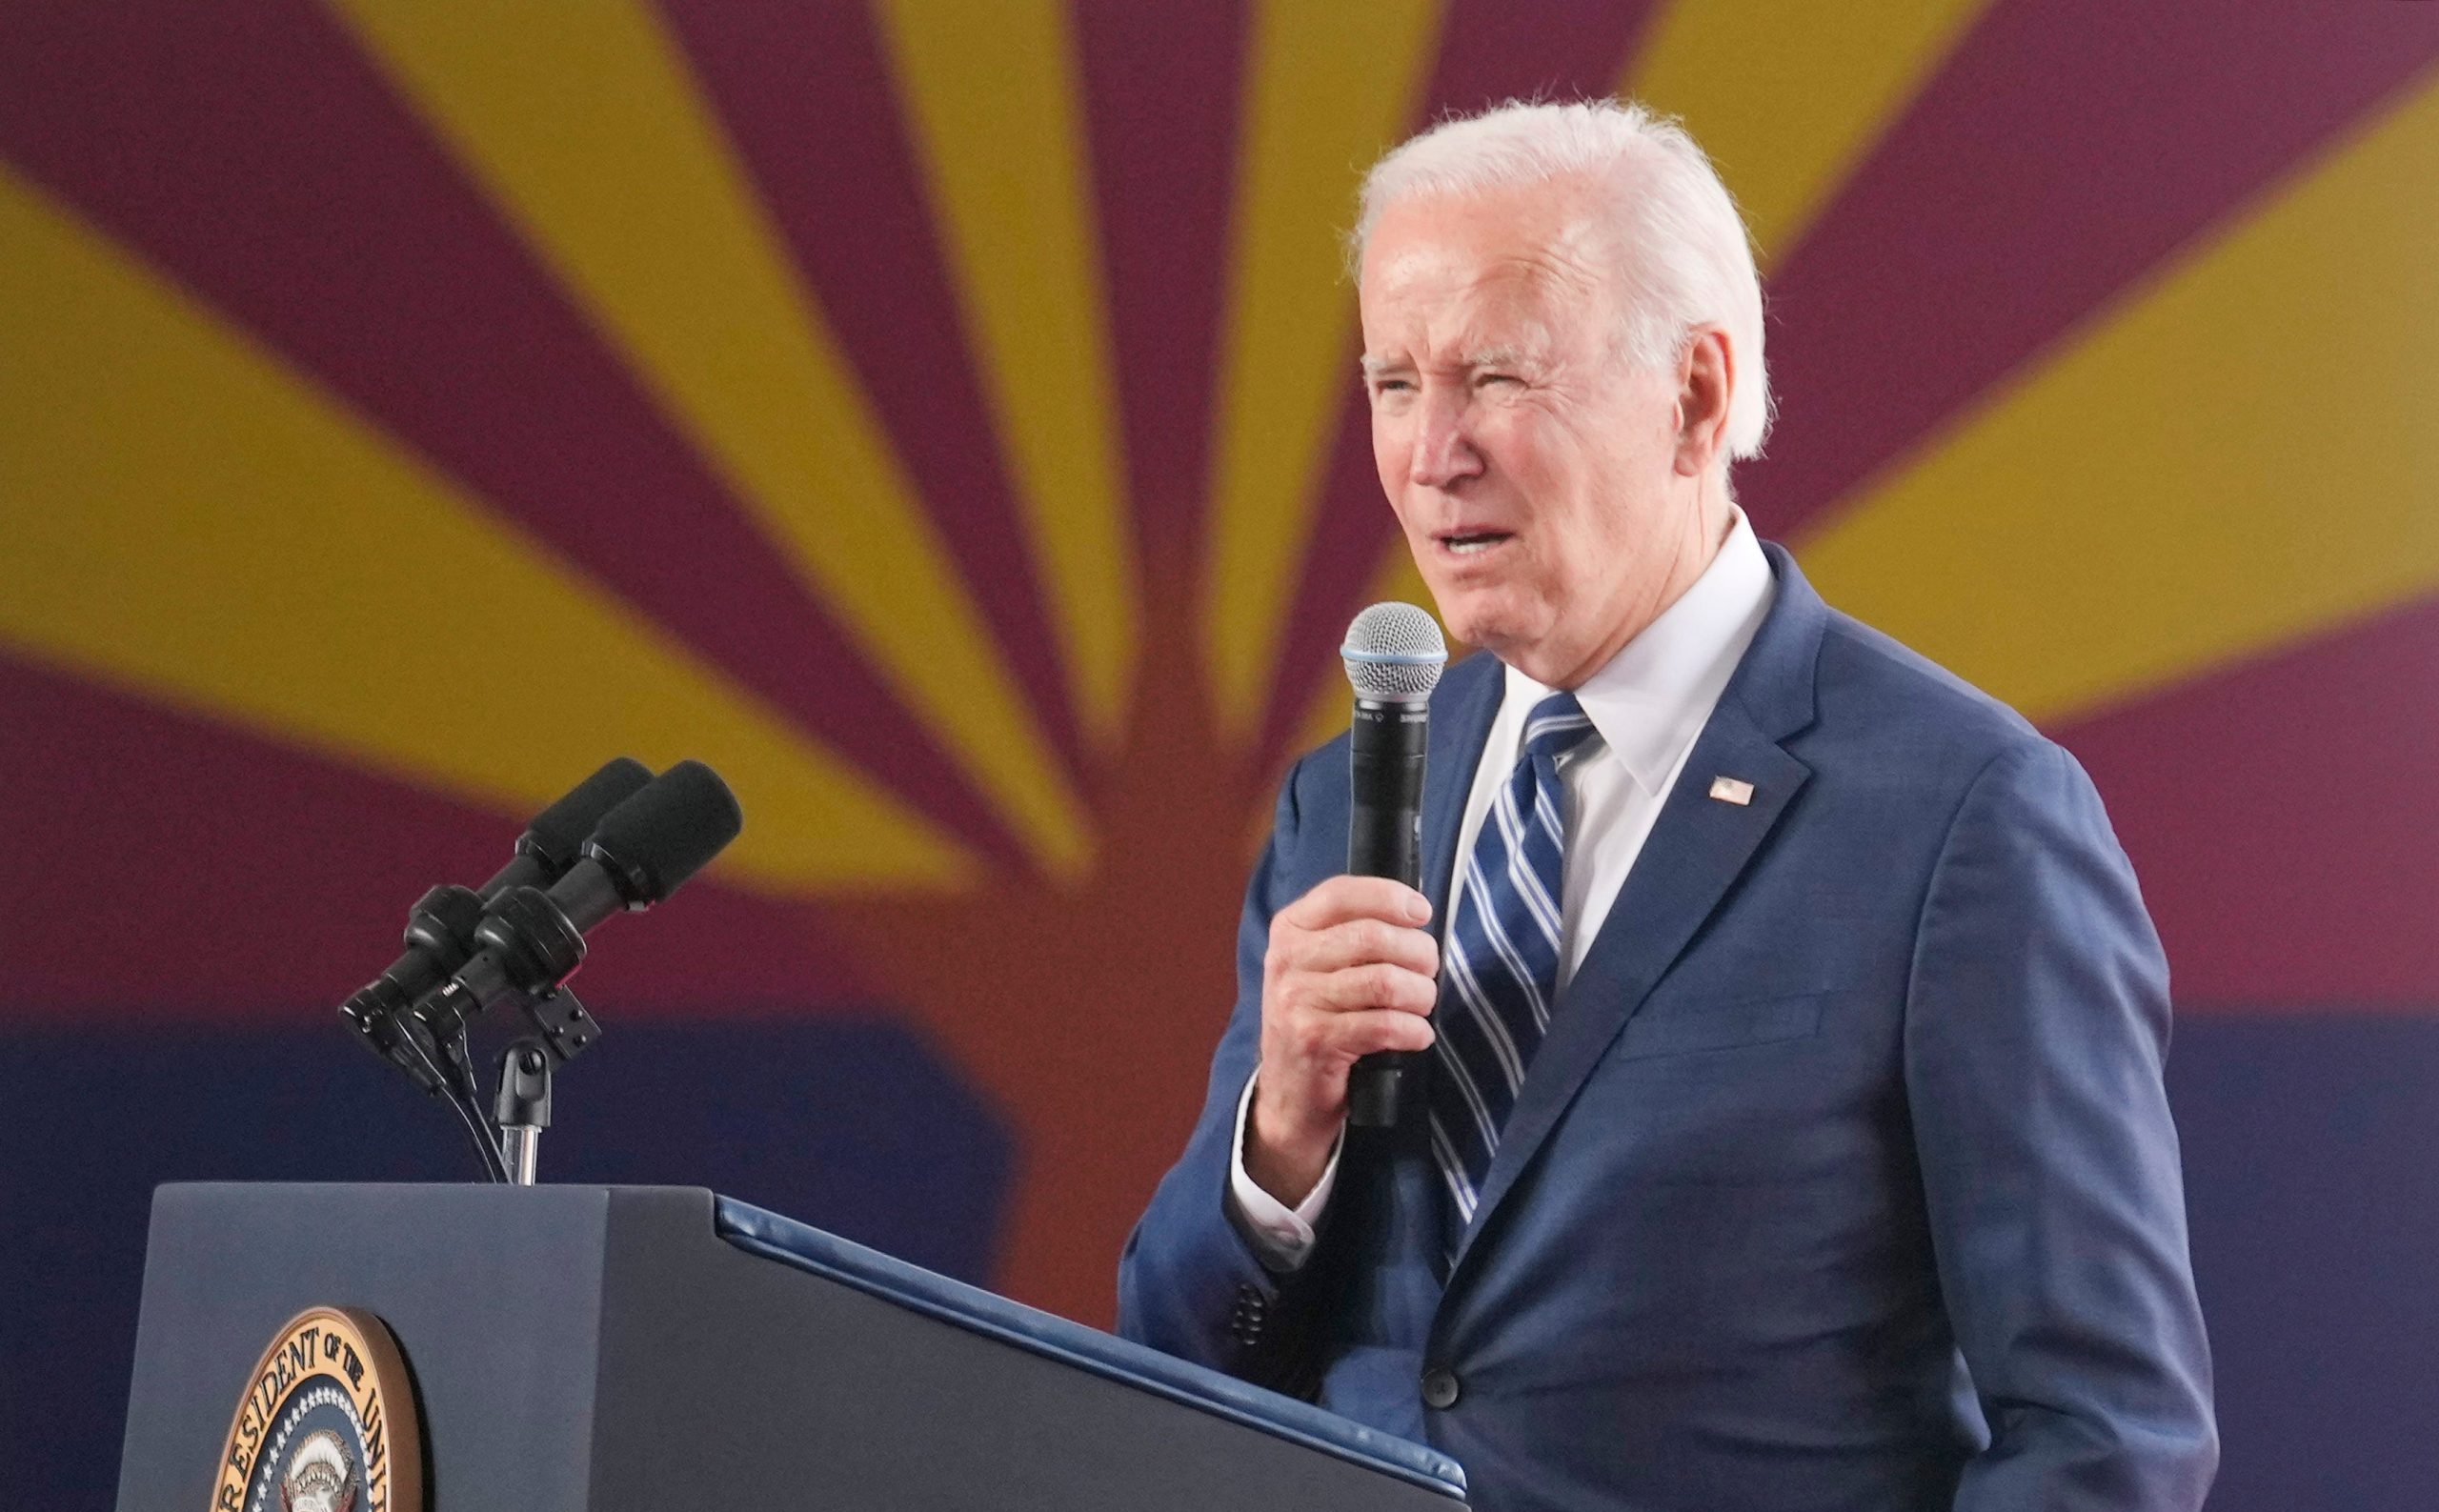 President Joe Biden is being roundly roasted for his epic bracket failure, picking Arizona to win the NCAA Tournament.